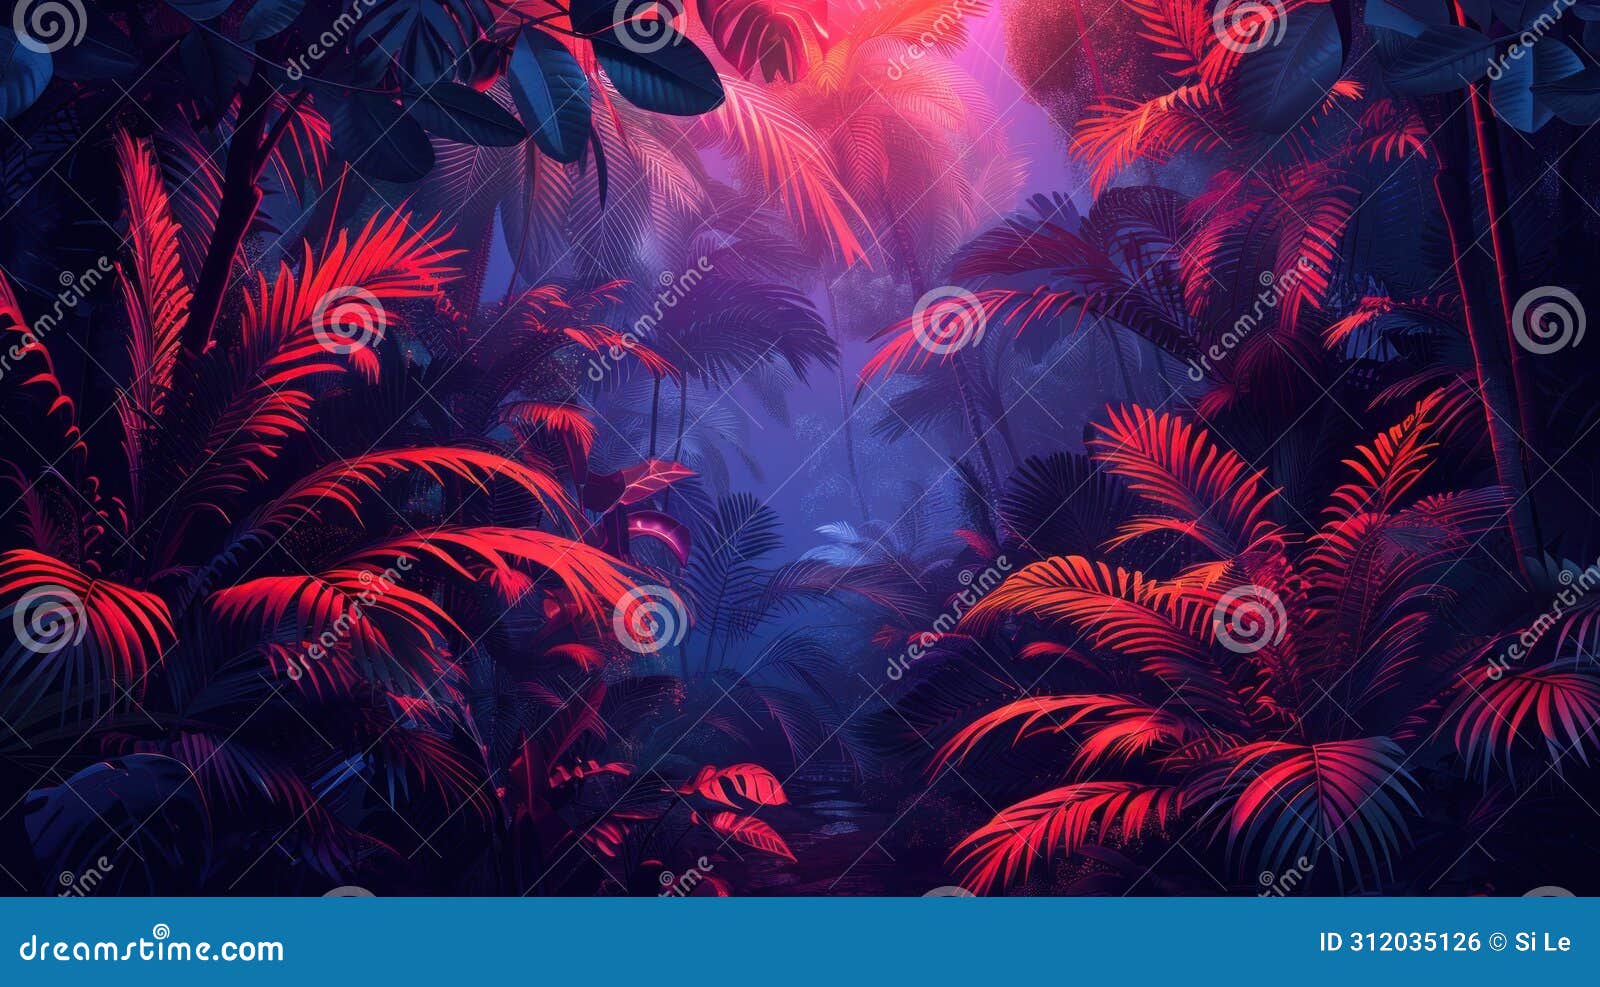 neon-lit tropical jungle with retro palms & plants in dark trend exotica